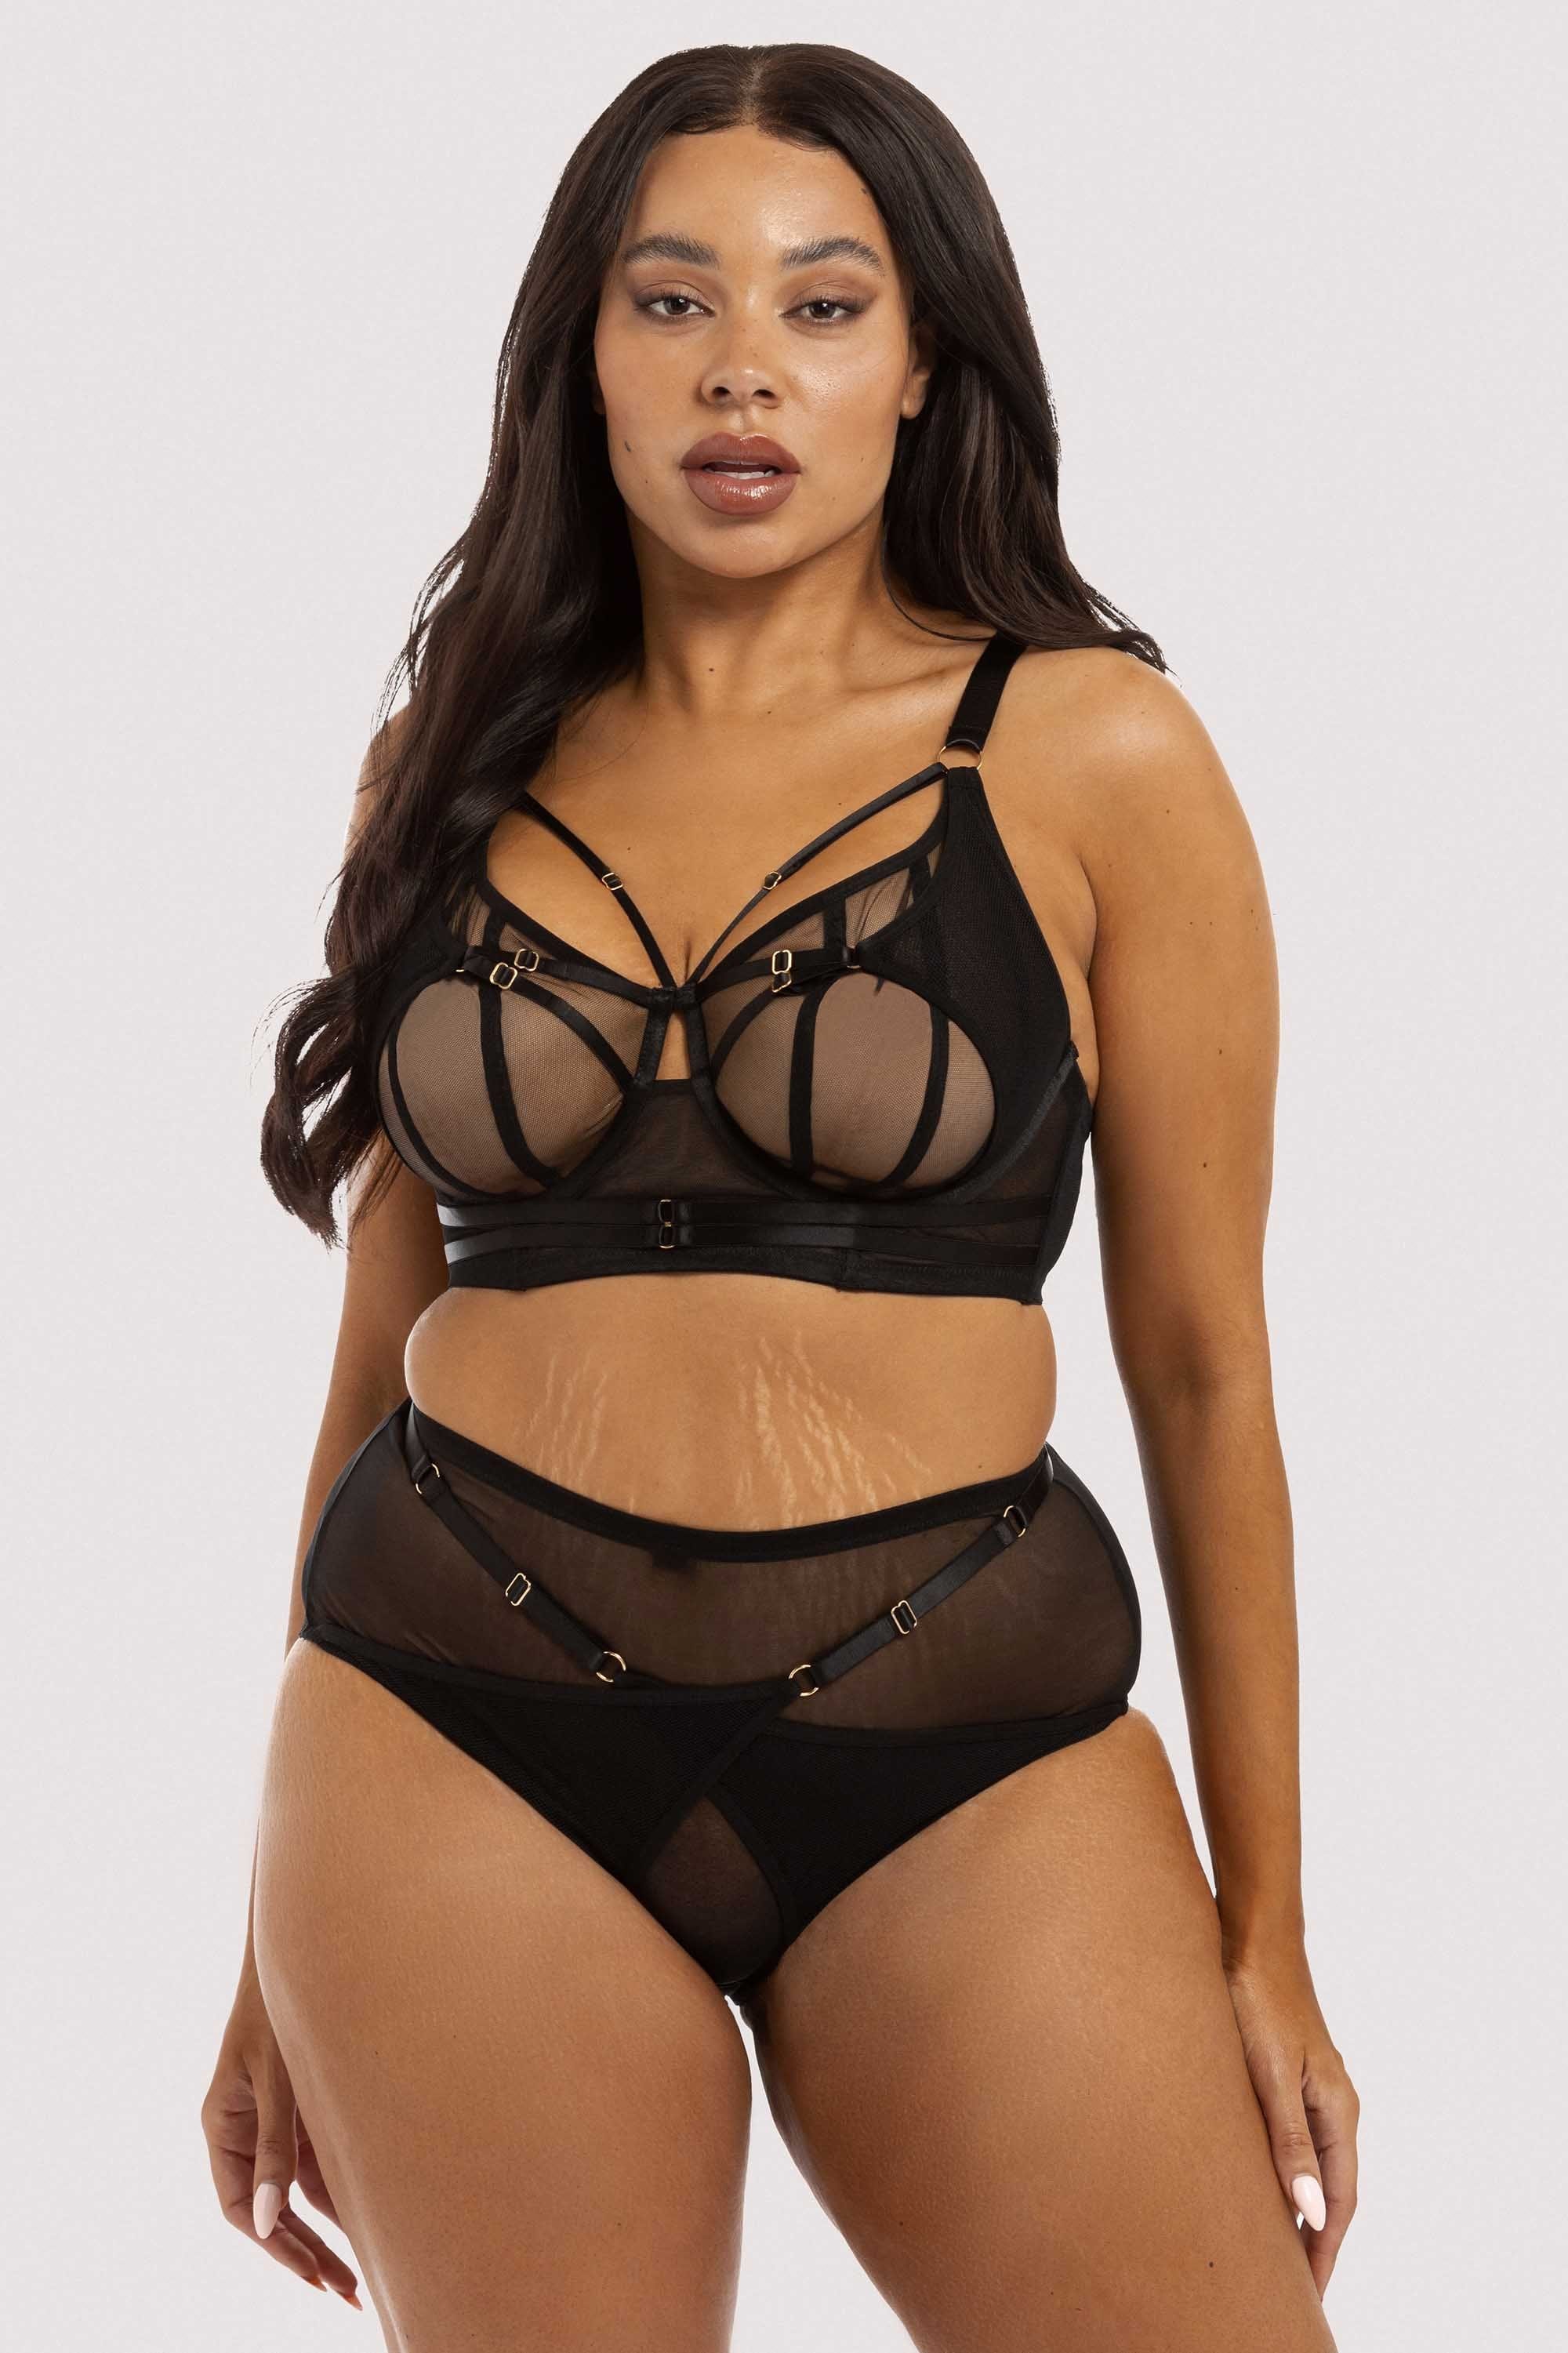 model wears Eddie Black Crossover bra with lingerie set